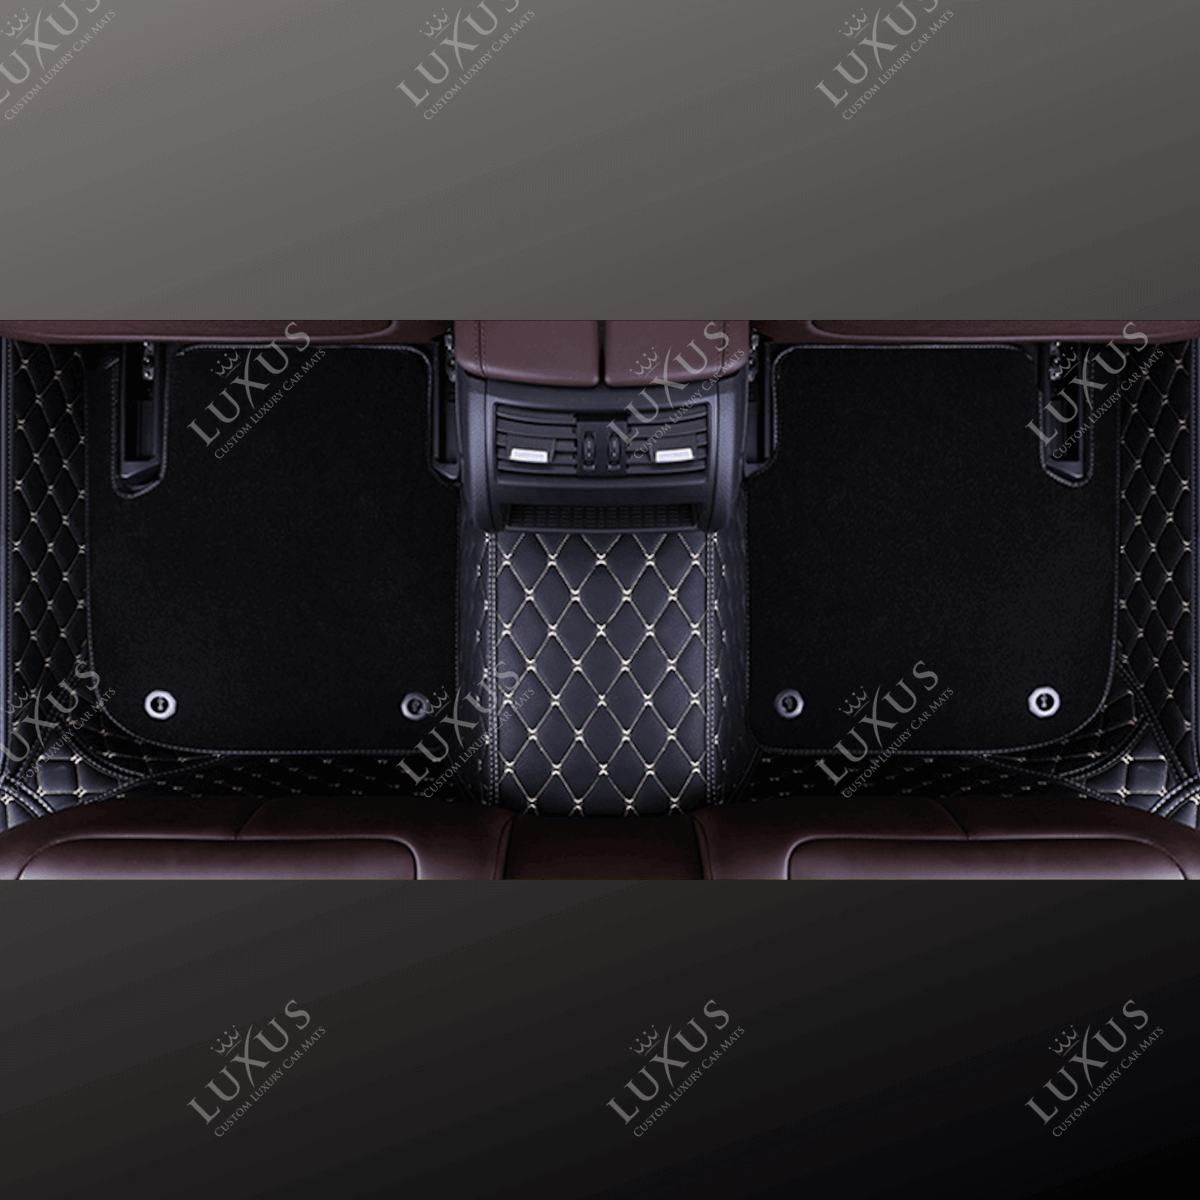 Black & Beige Stitching Base & Black Top Carpet Double Layer Luxury Car Mats Set